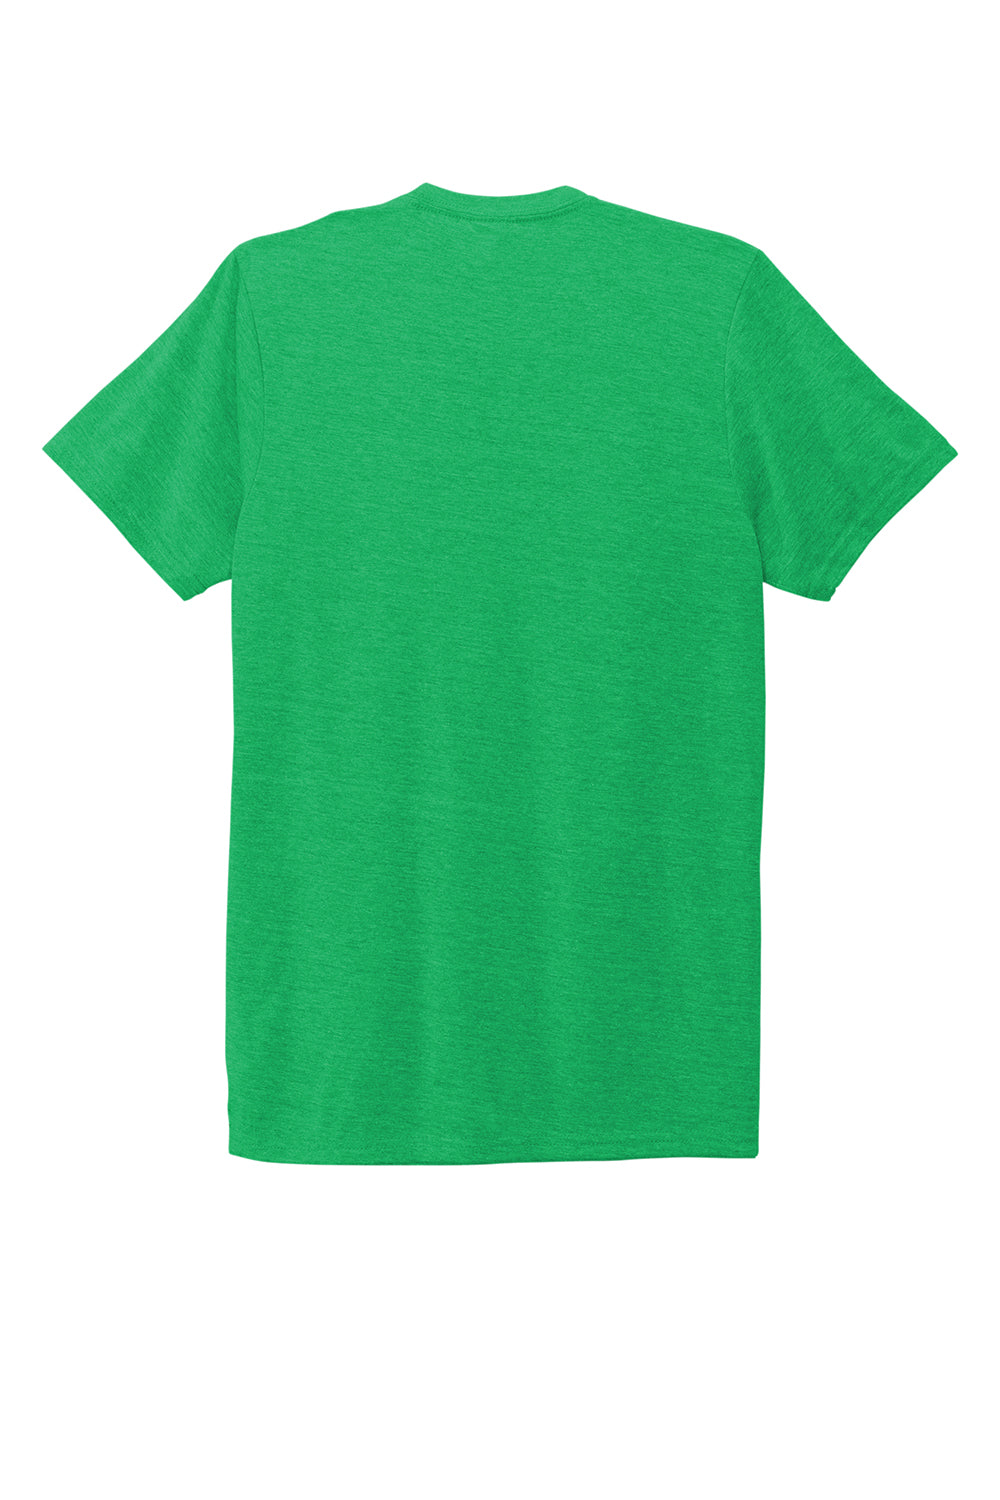 Allmade AL2004 Mens Short Sleeve Crewneck T-Shirt Enviro Green Flat Back